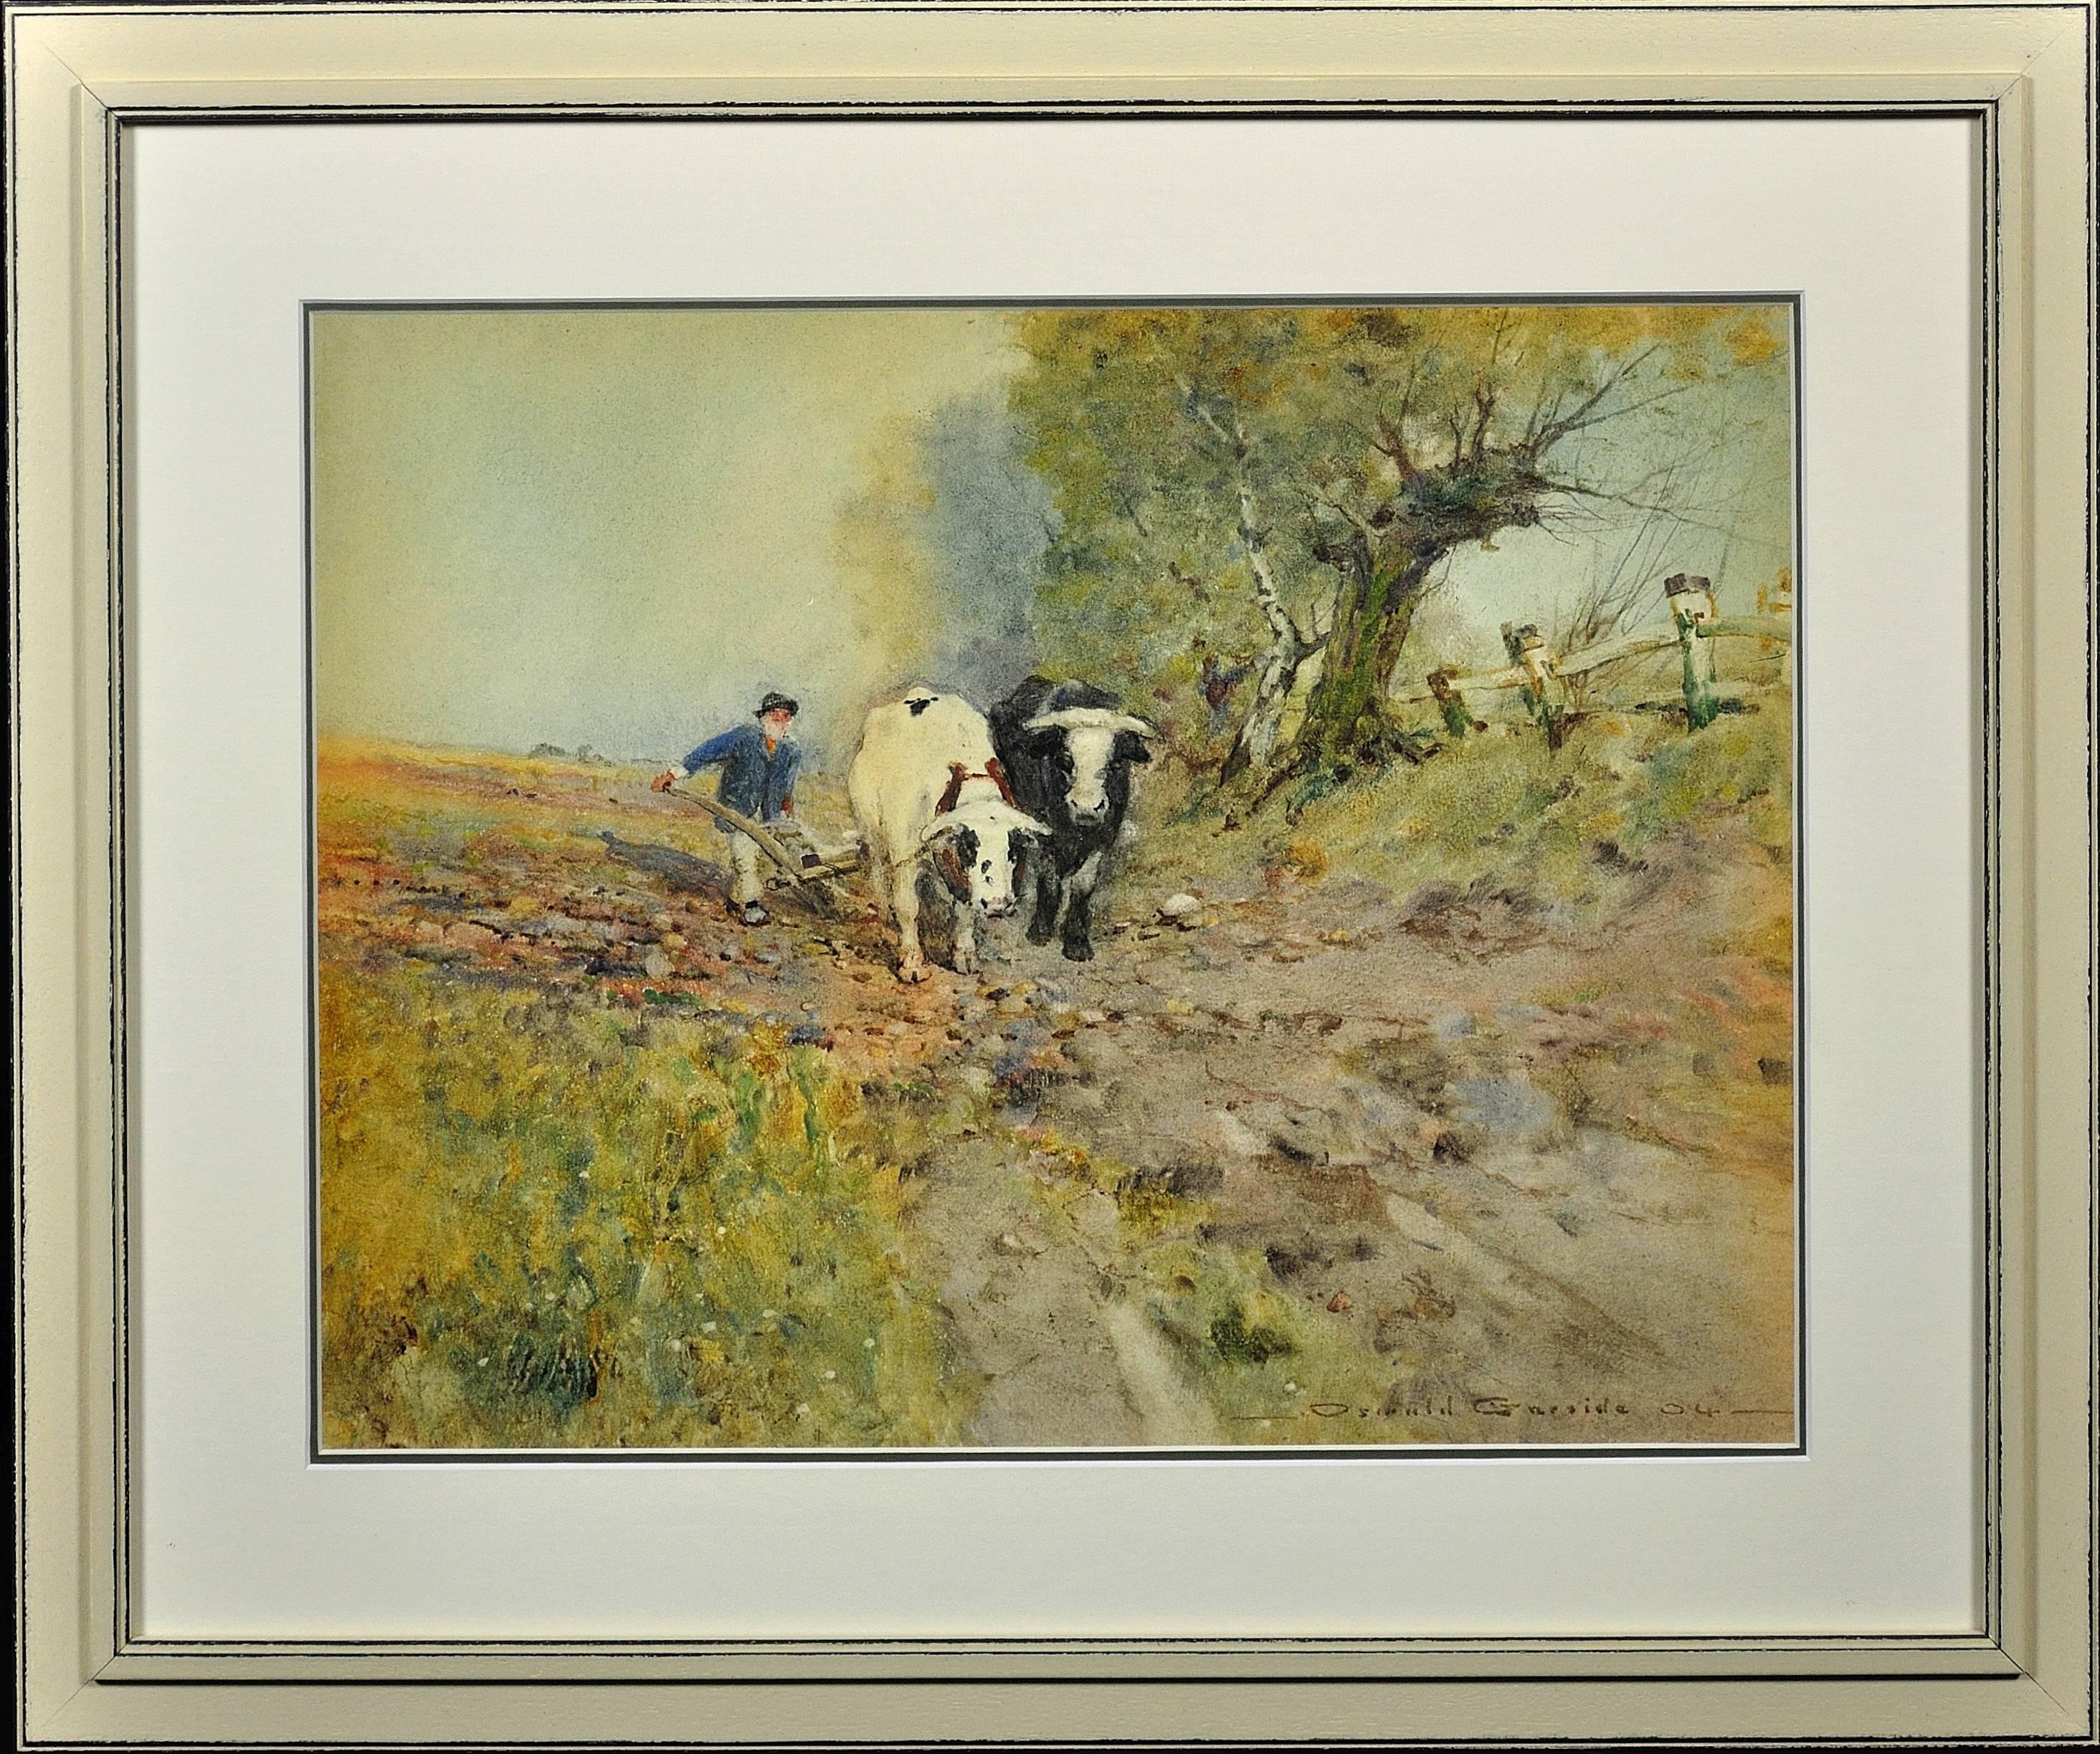 Oswald Garside Animal Art - Beasts of Burden. Arable Farming. Field. Plough. Original Victorian Watercolor